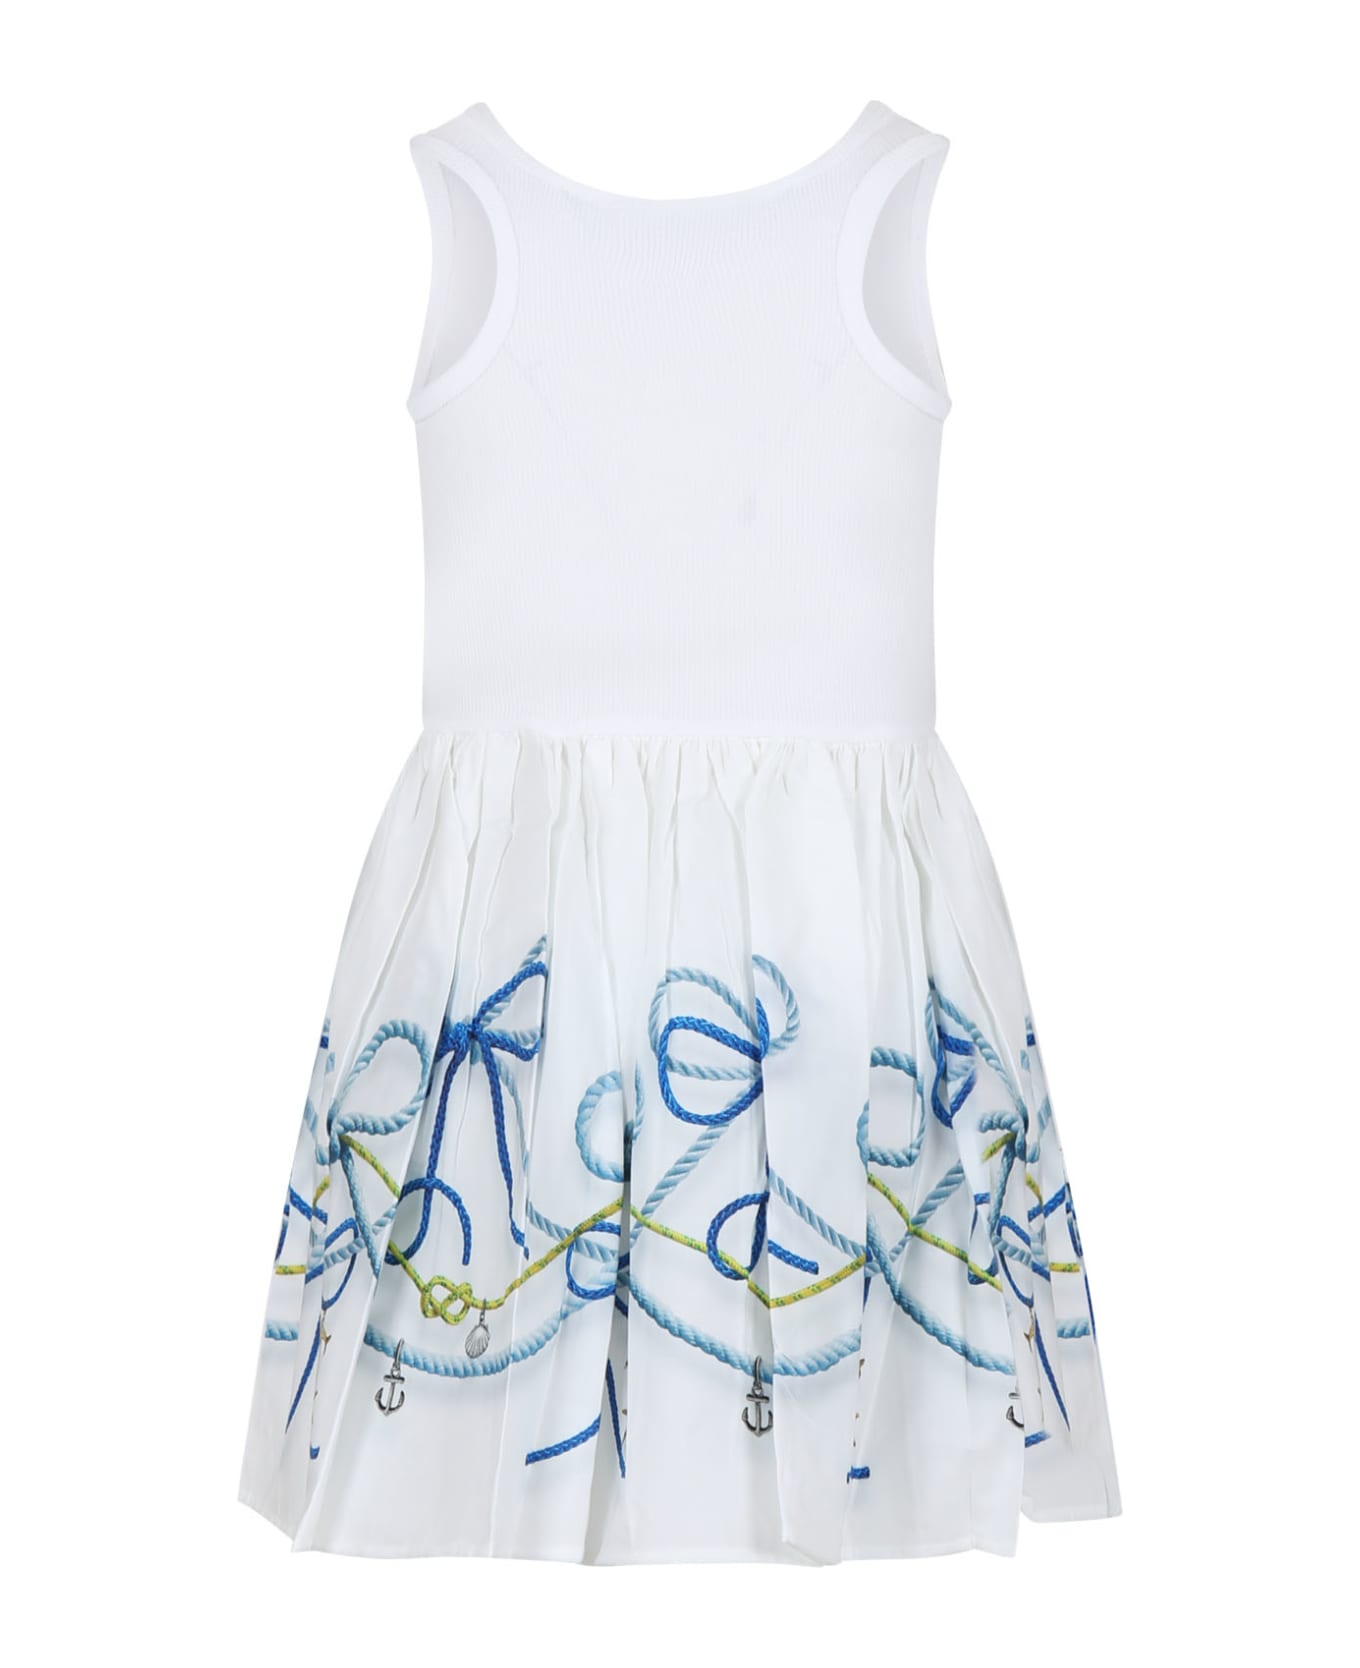 Molo White Dress For Girl With Bows Print - White